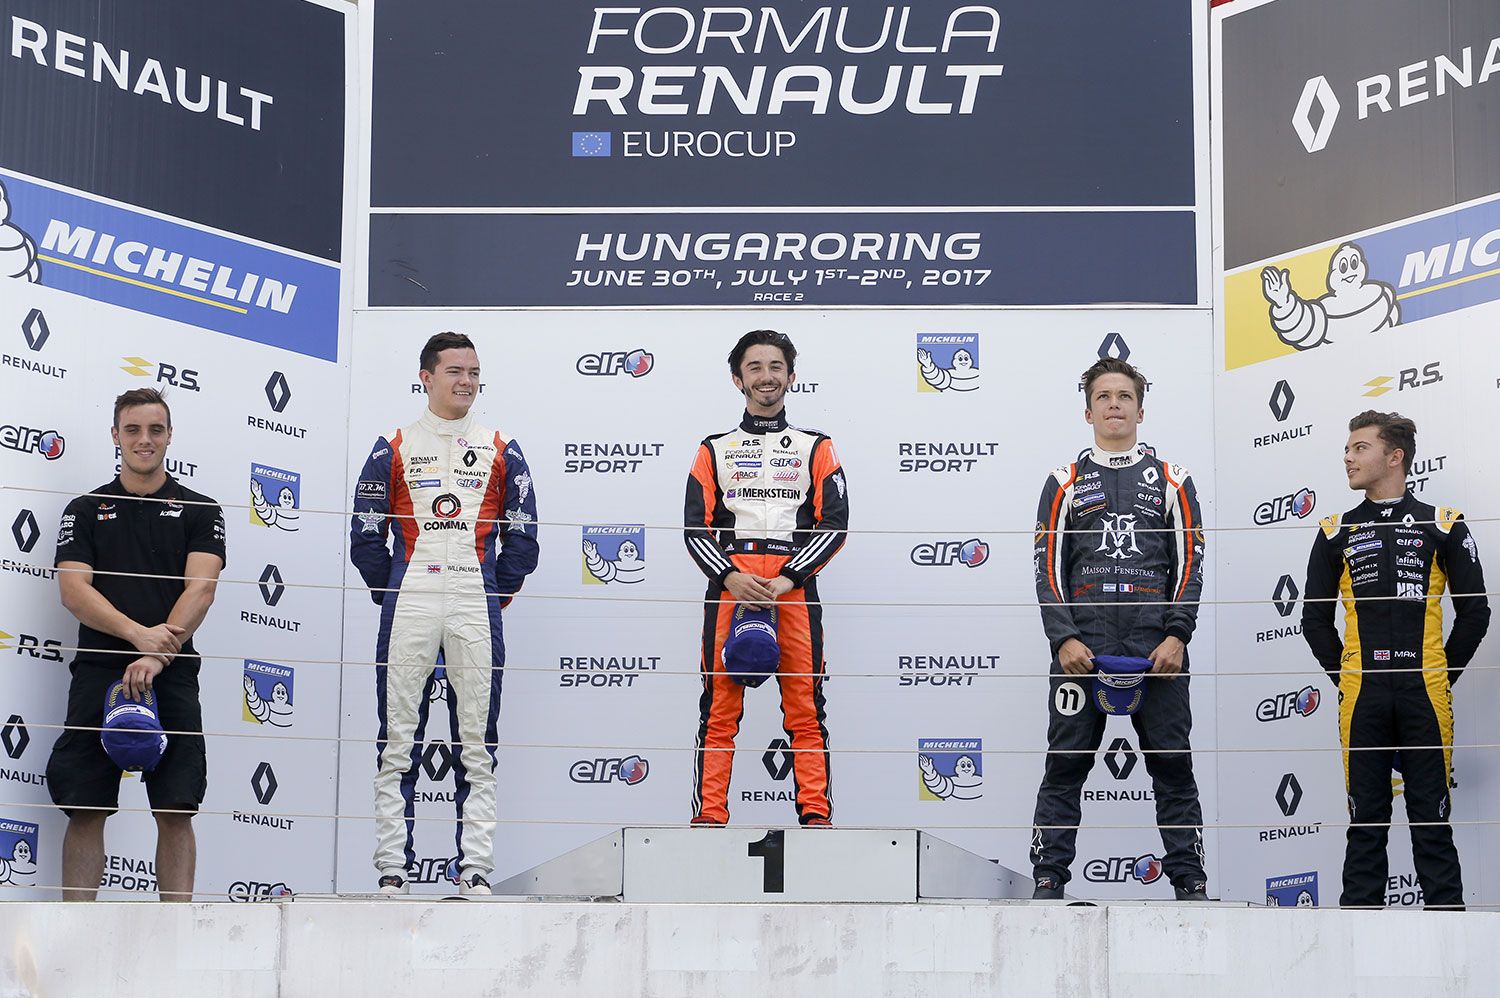 Hungaroring - Hongrie - Gabriel Aubry - Gabi-Aubry - Formule Renault 2.0 - Tech1.com